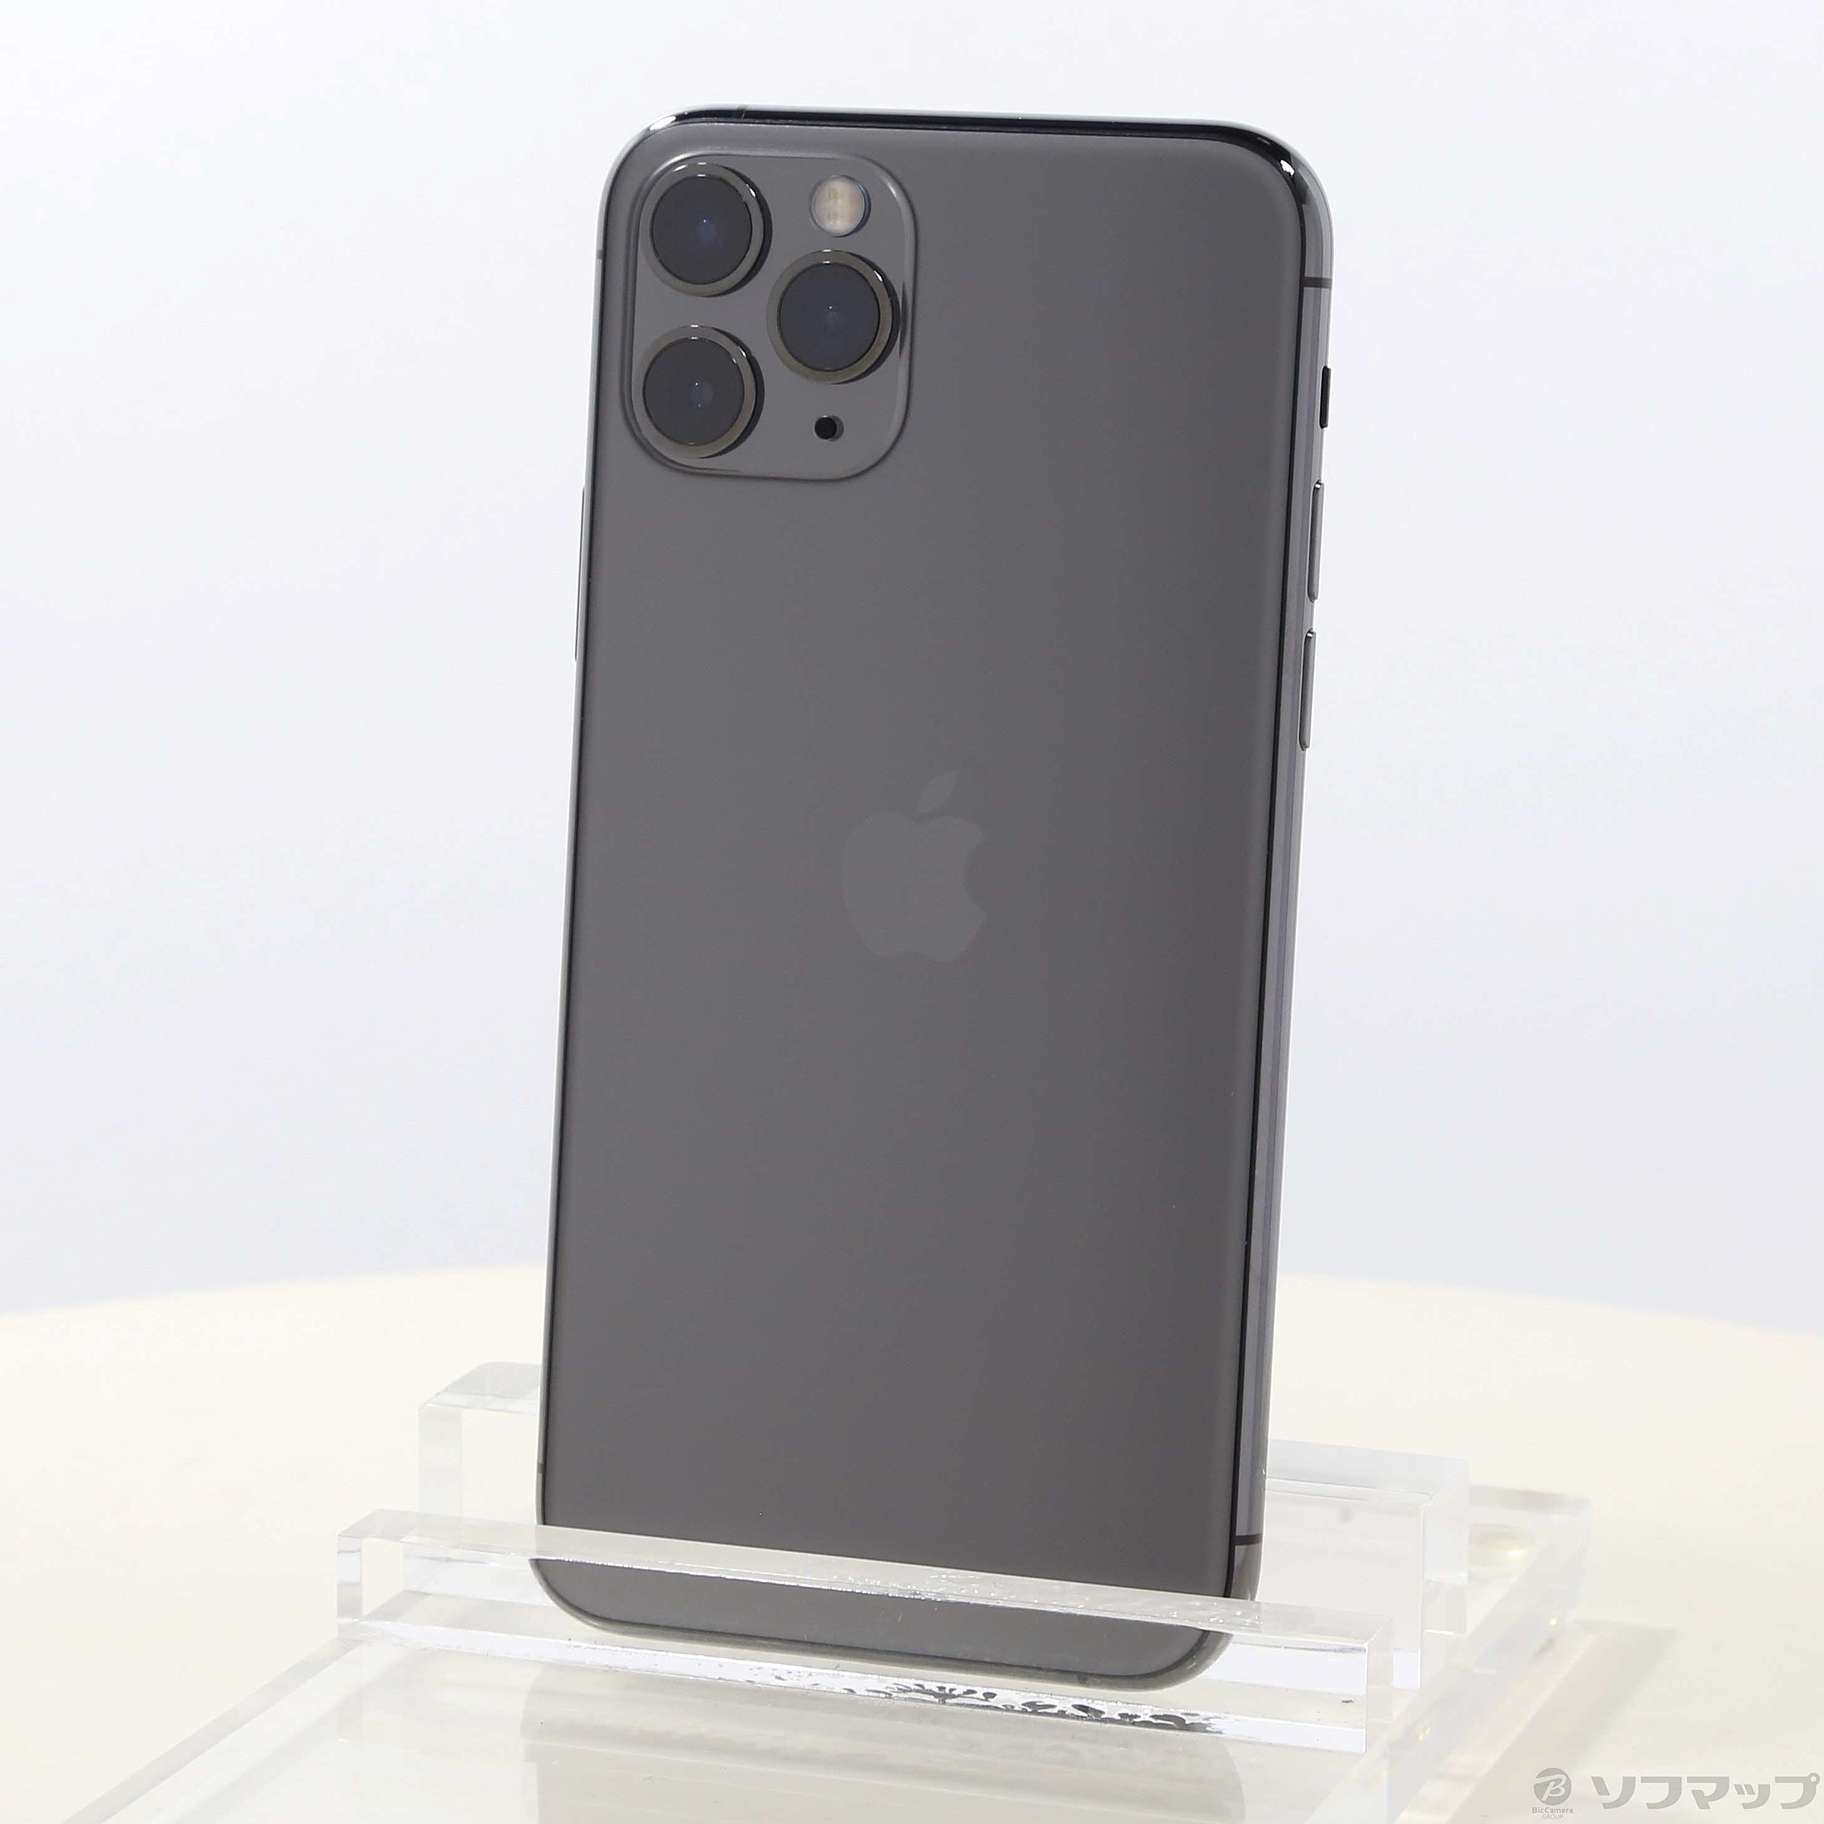 iPhone 11 Pro Max スペースグレイ 256GB SIMフリー - スマートフォン本体